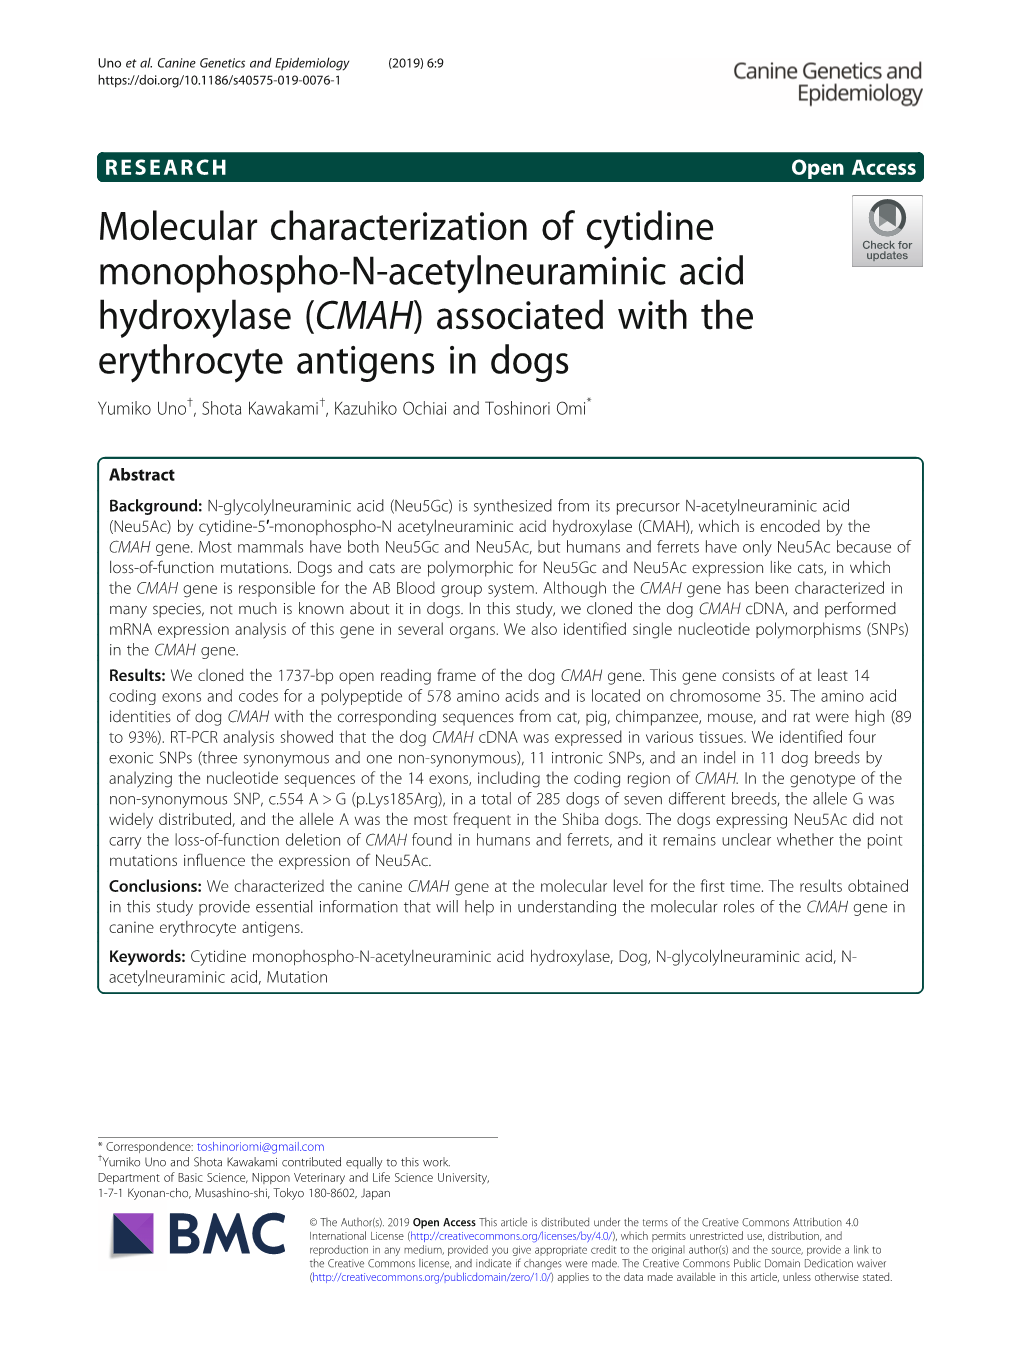 CMAH) Associated with the Erythrocyte Antigens in Dogs Yumiko Uno†, Shota Kawakami†, Kazuhiko Ochiai and Toshinori Omi*